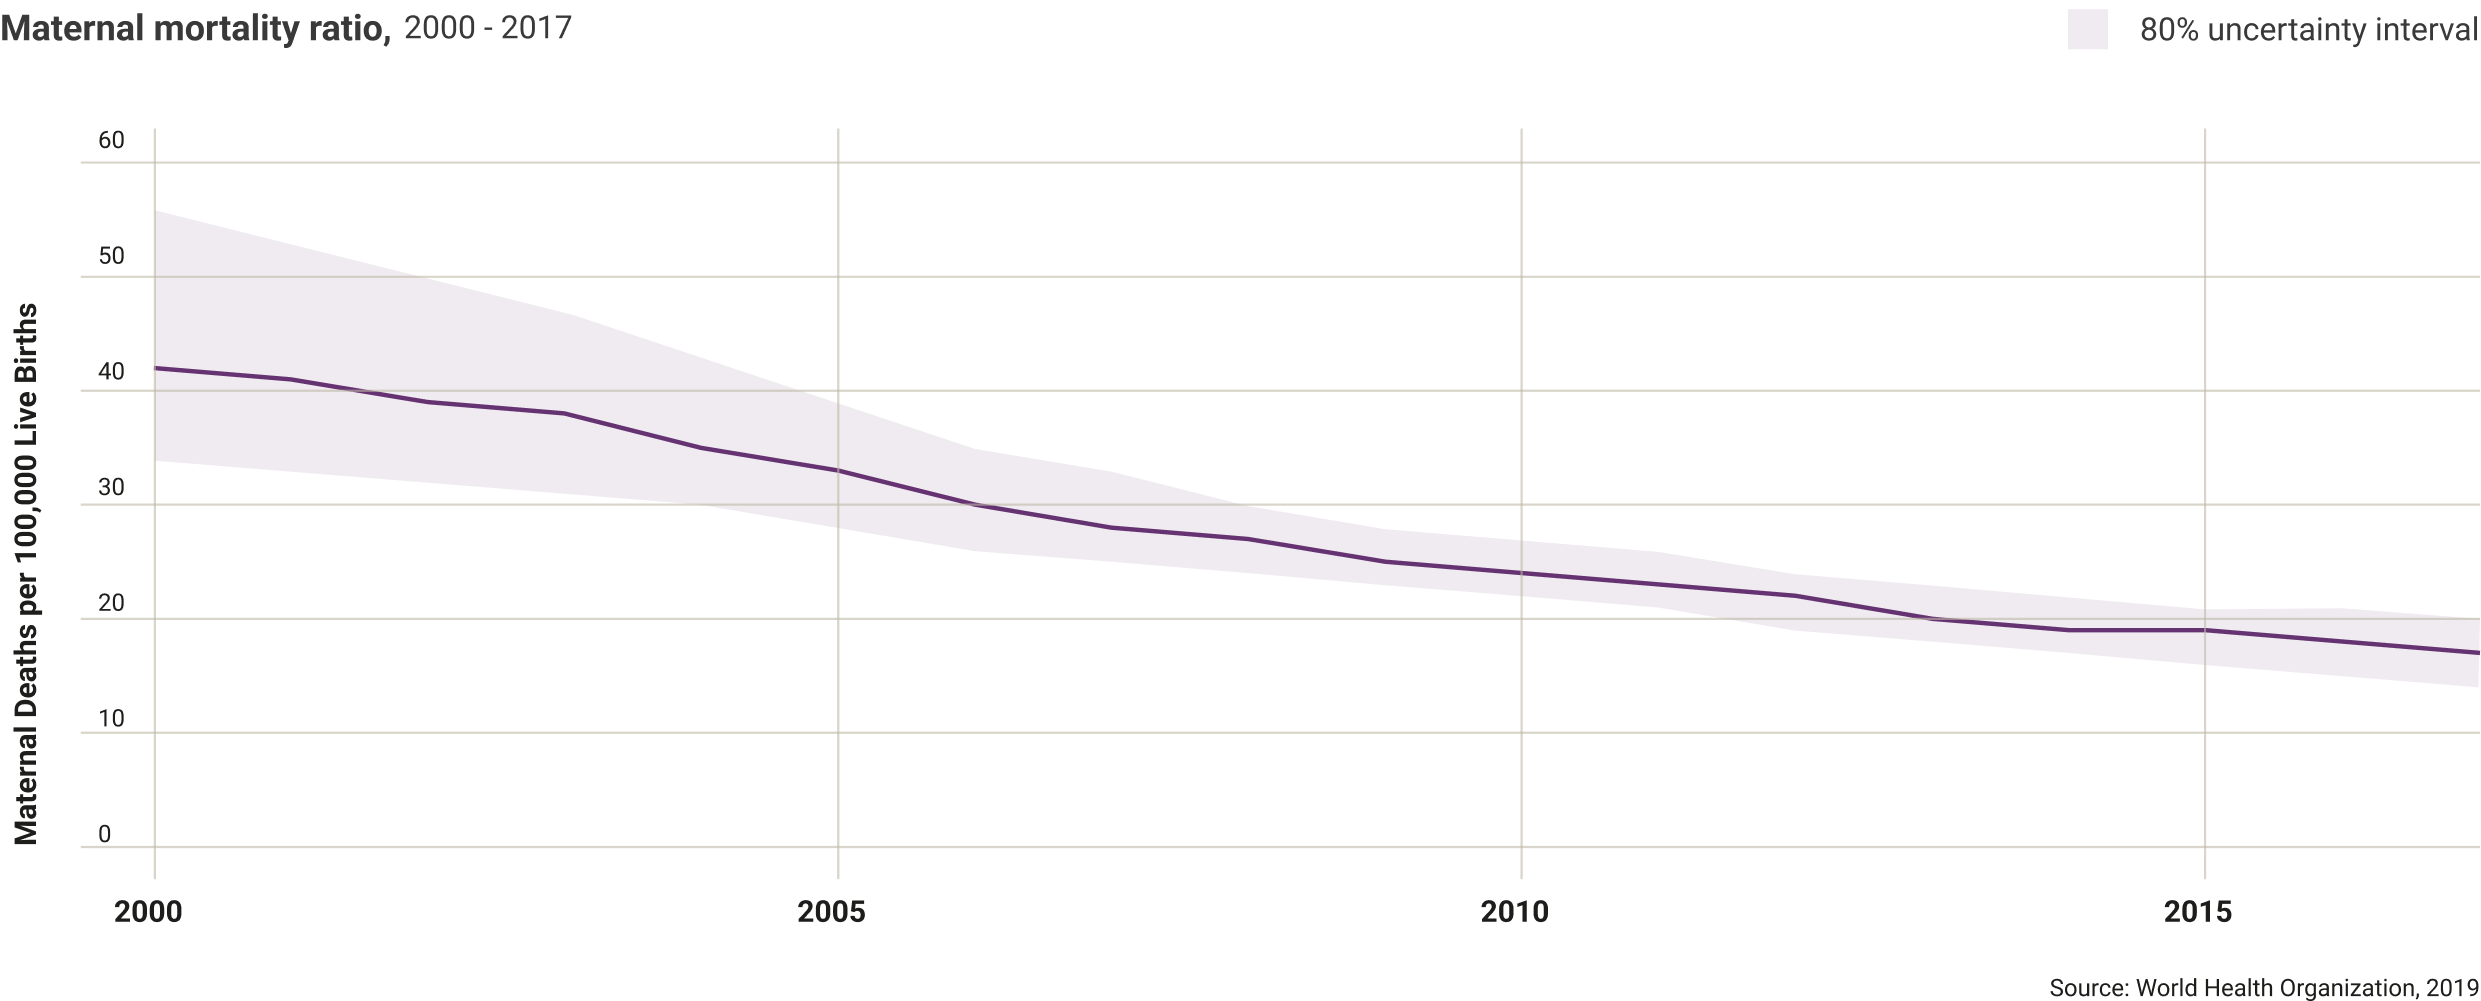 turkiye-maternal-mortality-ratio.png